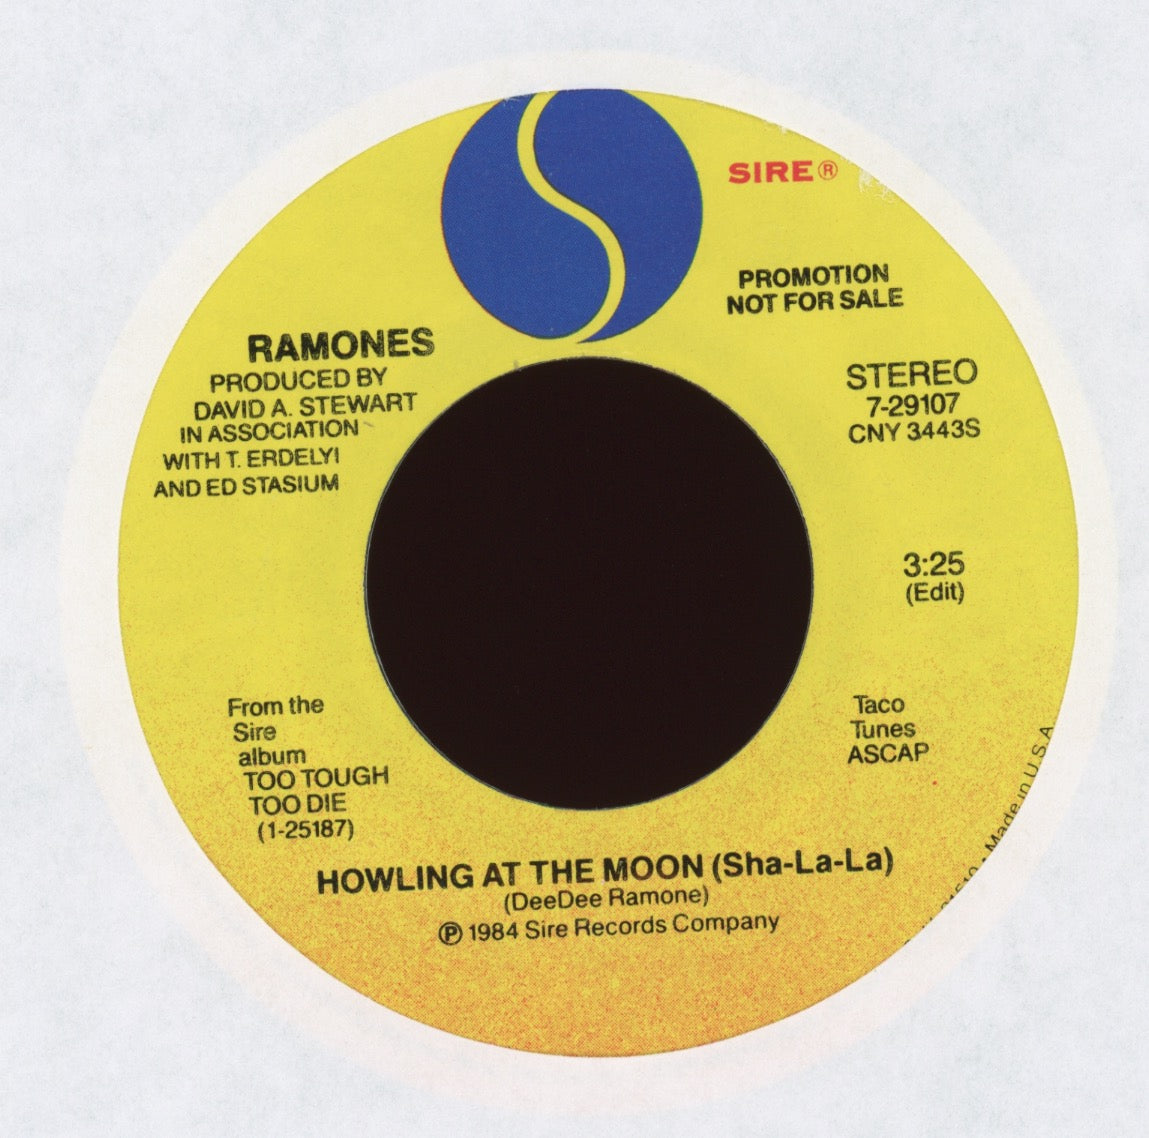 Ramones - Howling At The Moon (Sha-La-La) on Sire Promo